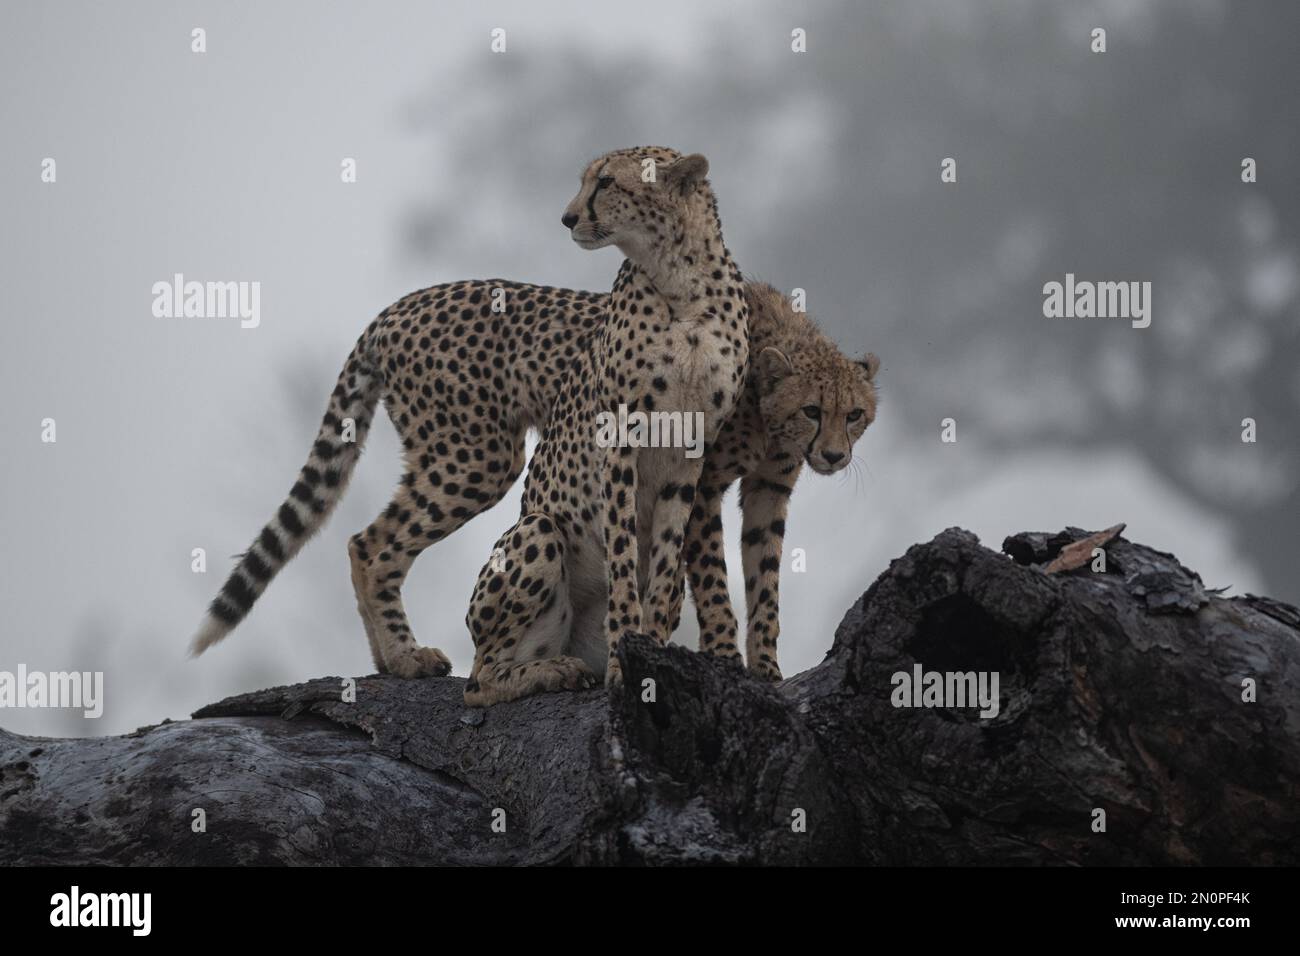 Two cheetah, Acinonyx jubatus, stand together on a tree. Stock Photo